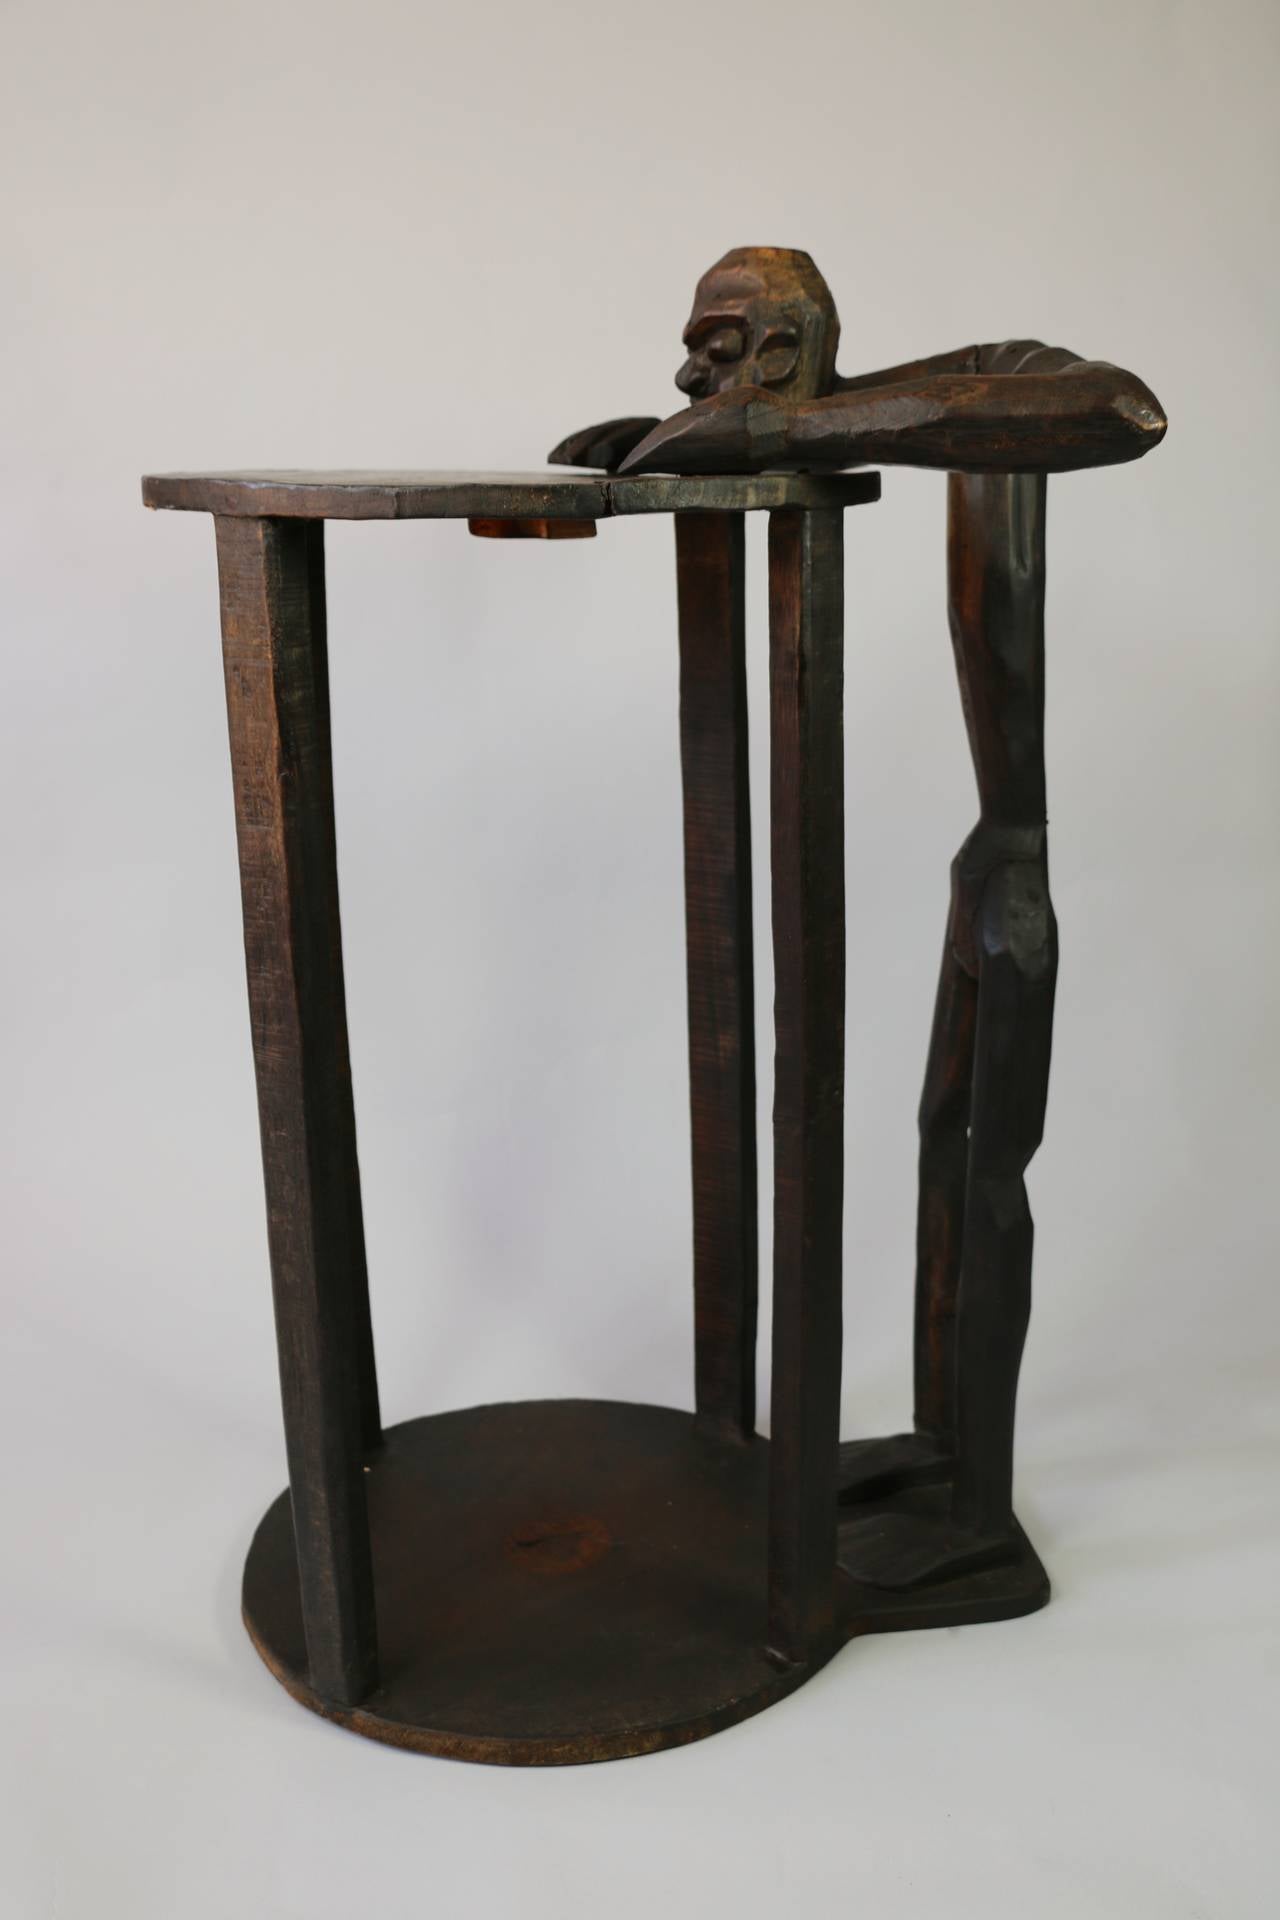 1950s circular pedestal table made of dark wood.